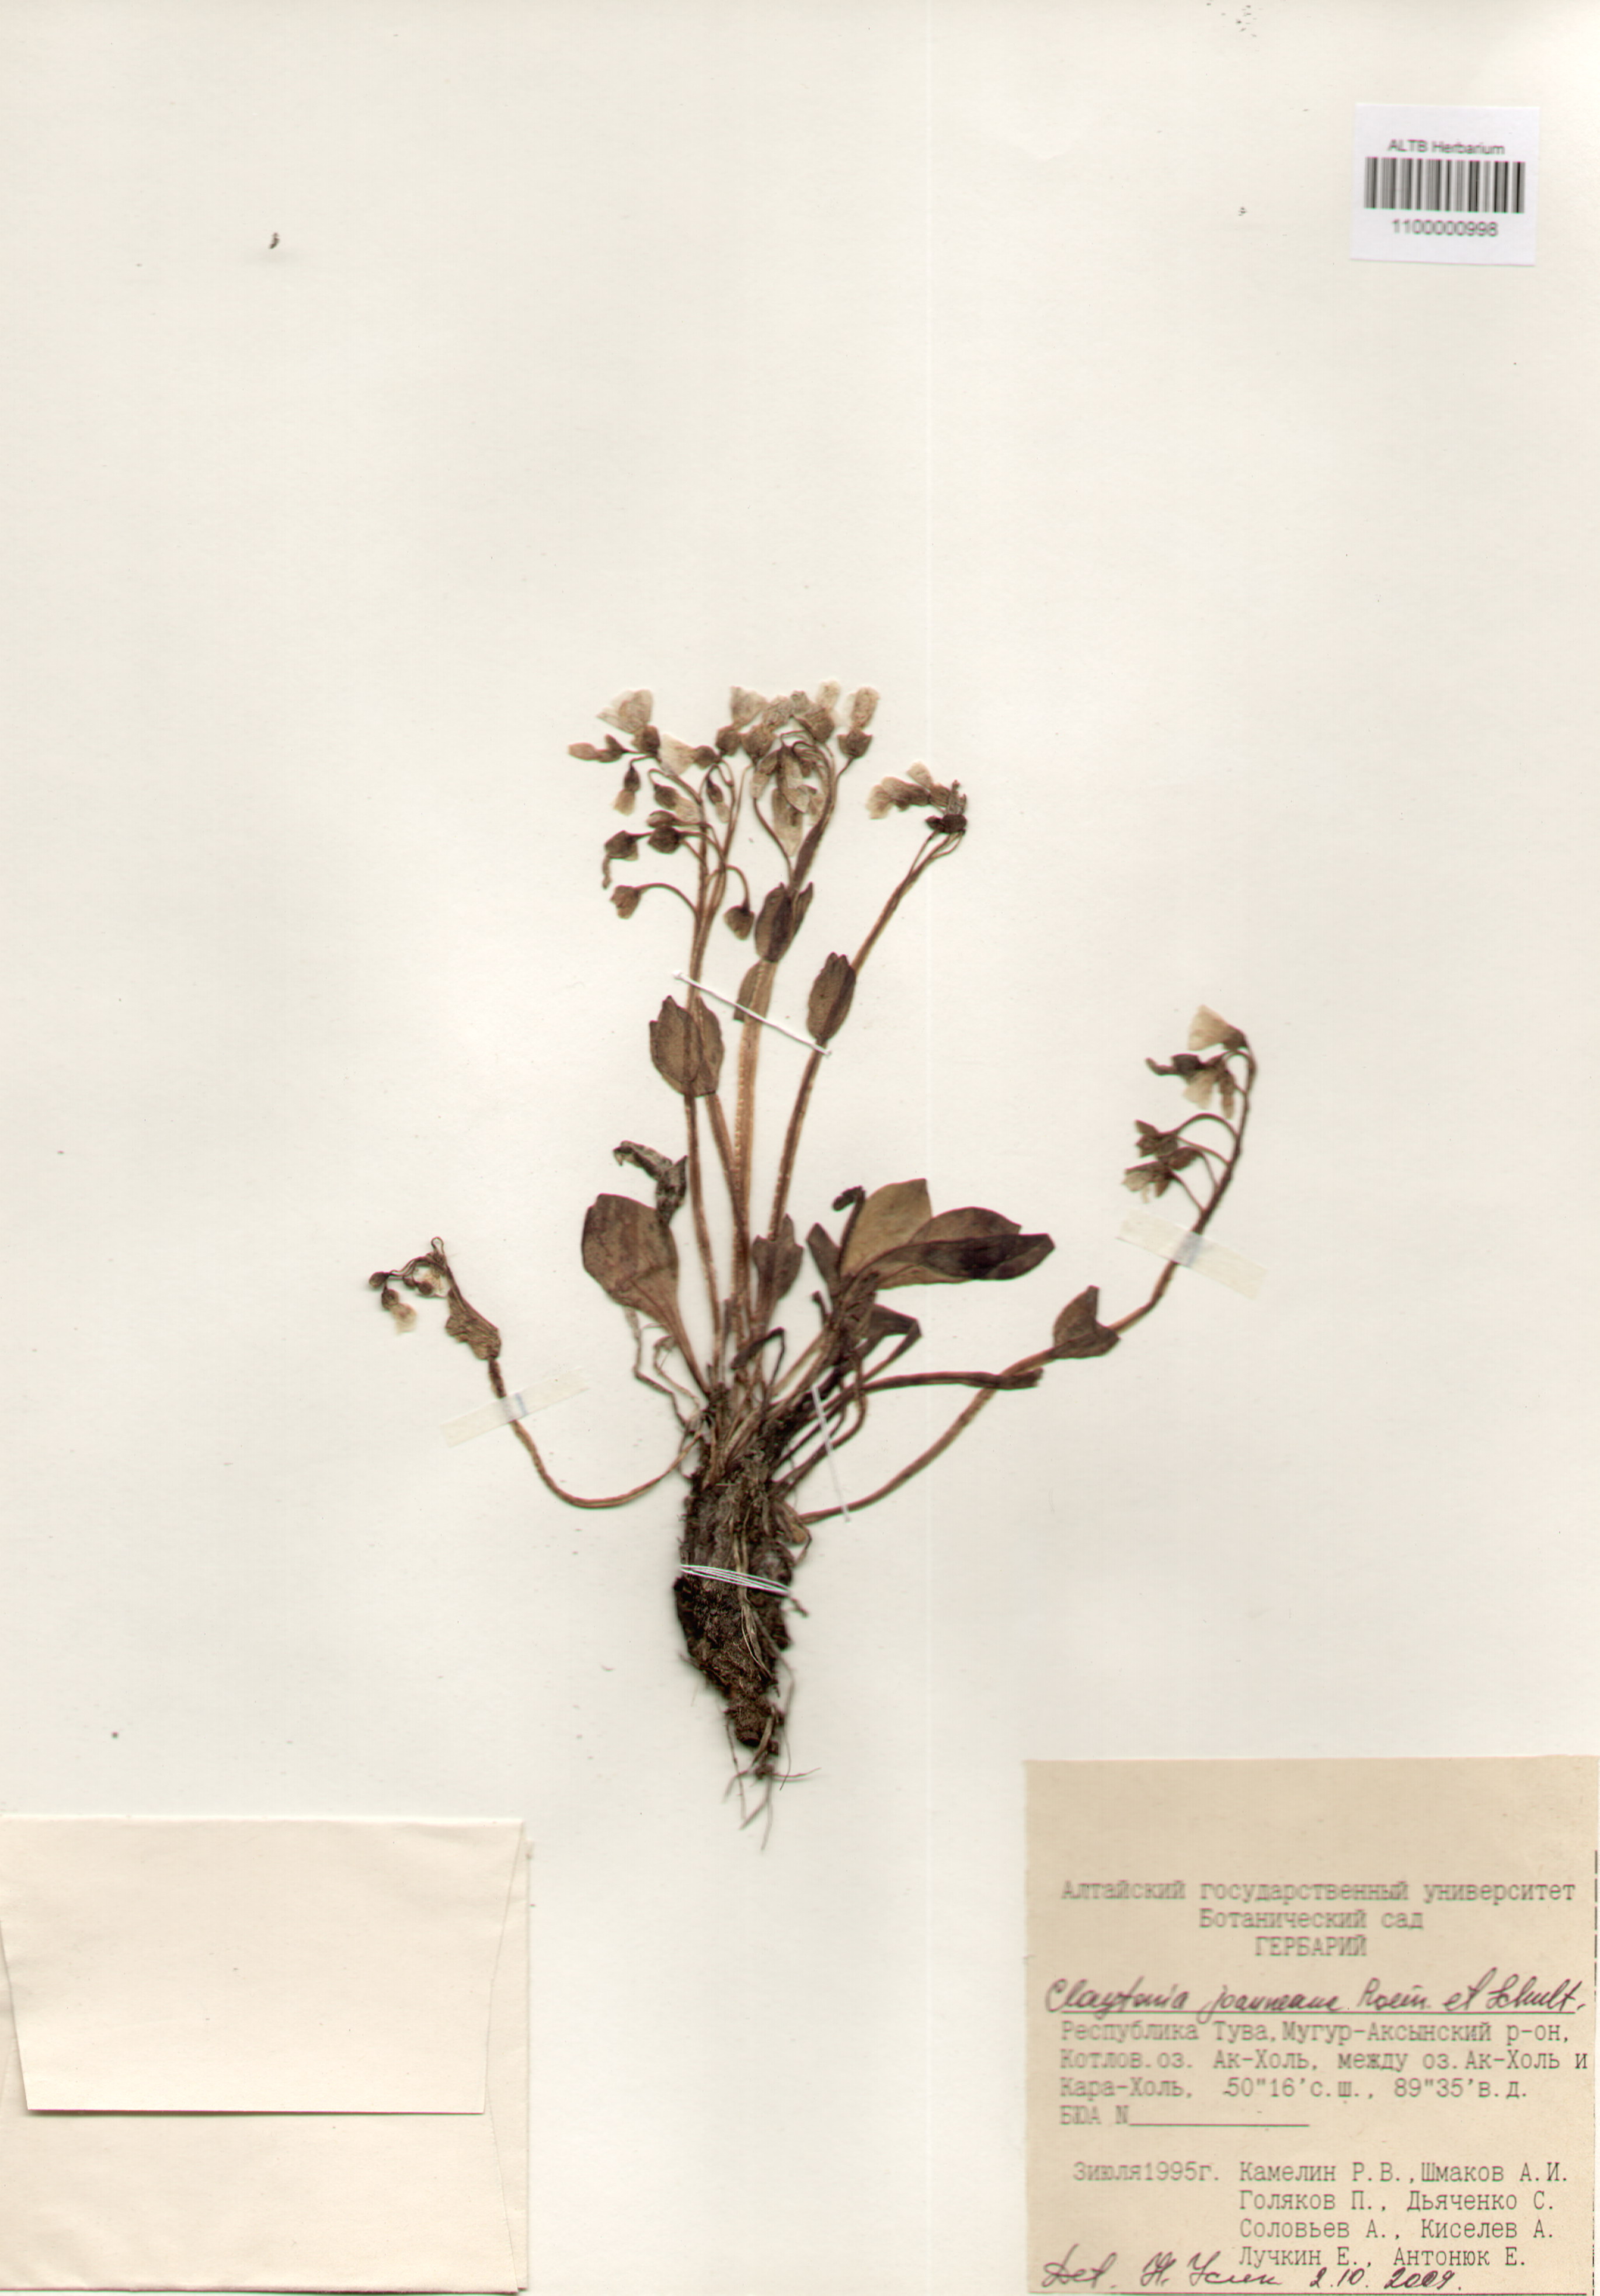 Portulacaceae,Claytonia joanneana Roem. et Schult.